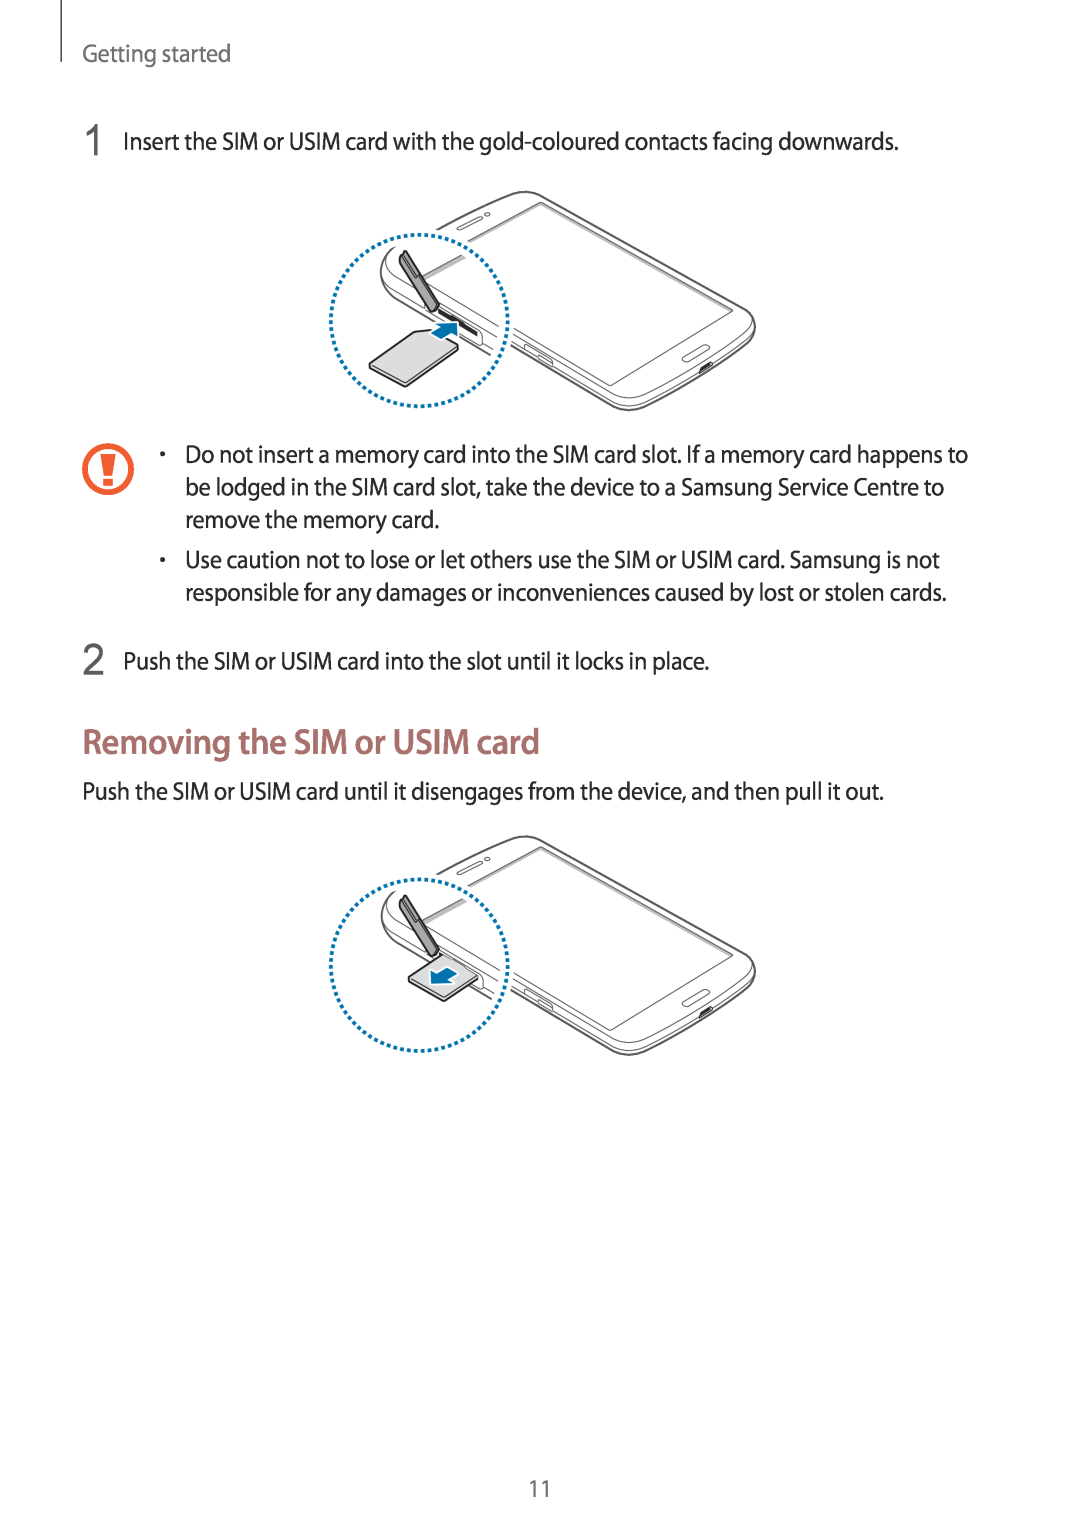 Samsung SM-T3150ZWAAUT, SM-T3150ZWAVD2, SM-T3150ZWADBT, SM-T3150ZWADTM manual Removing the SIM or USIM card, Getting started 